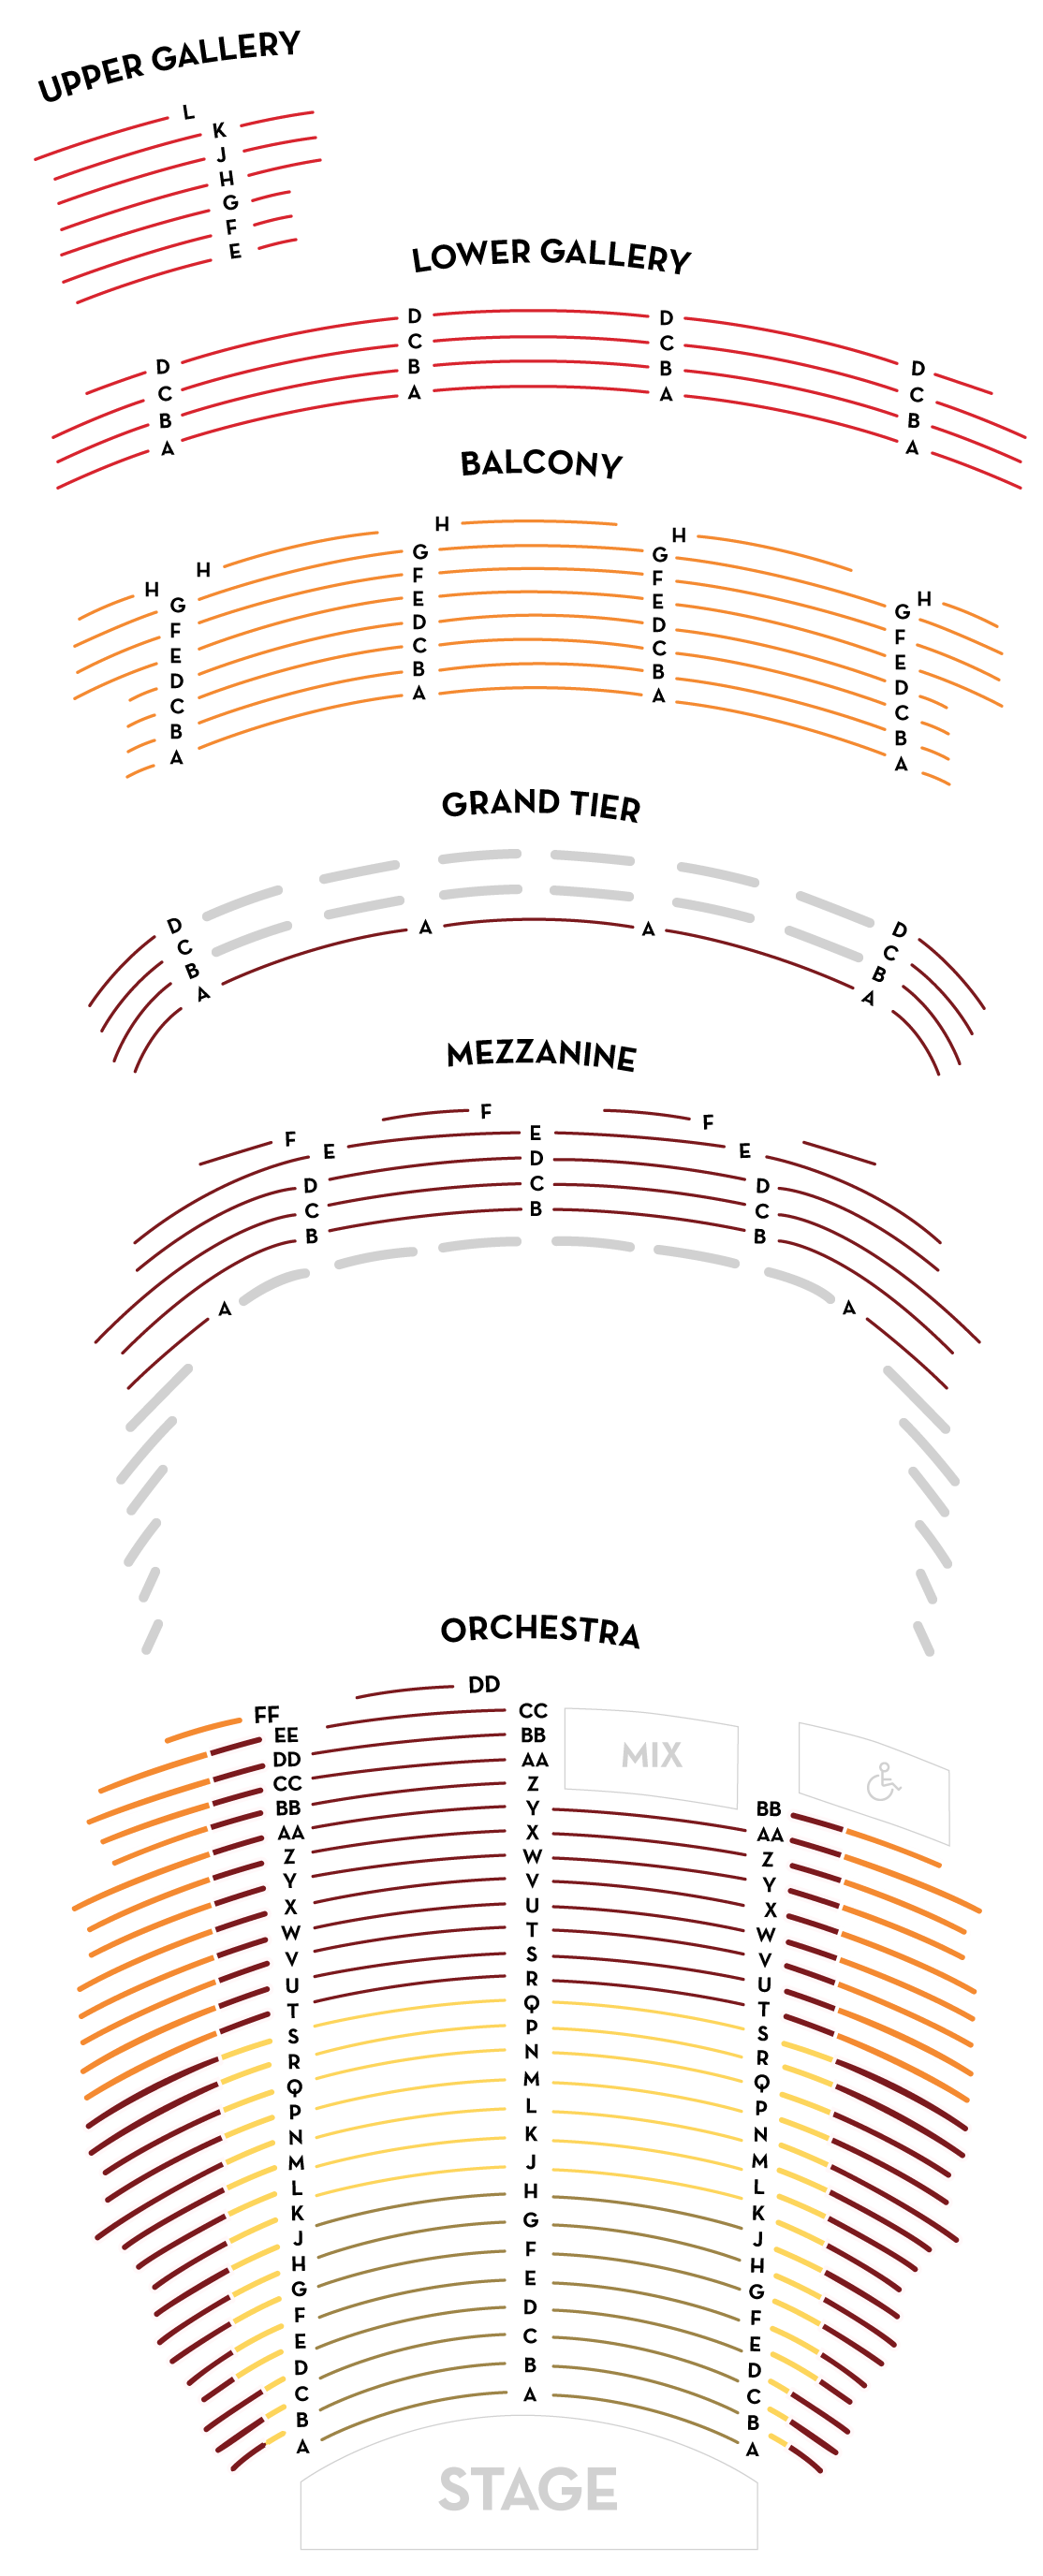 Orpheum Theatre La Seating Chart